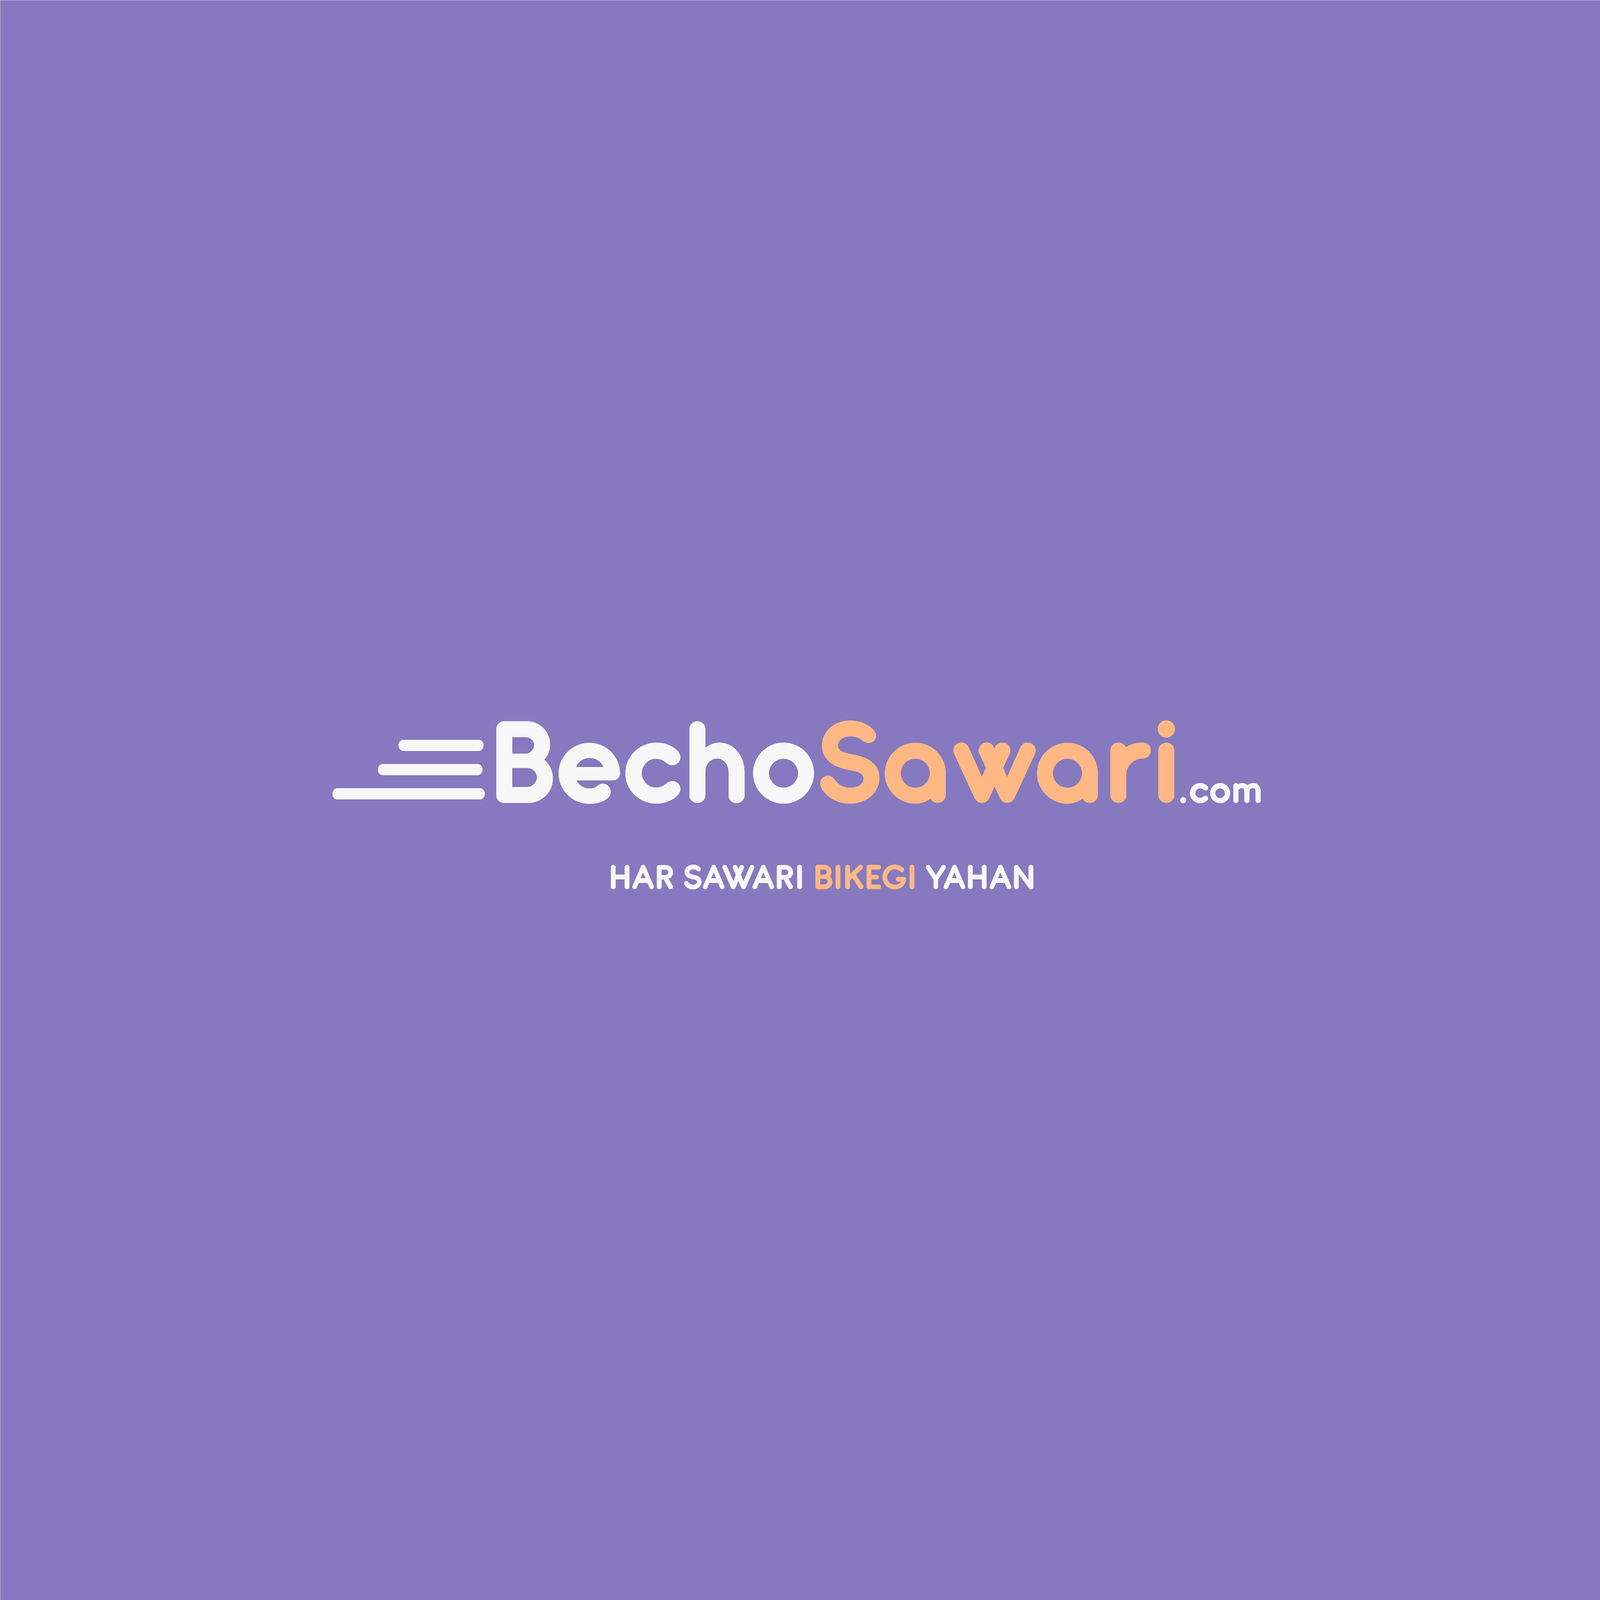 Becho Sawari Logo and Cover-04